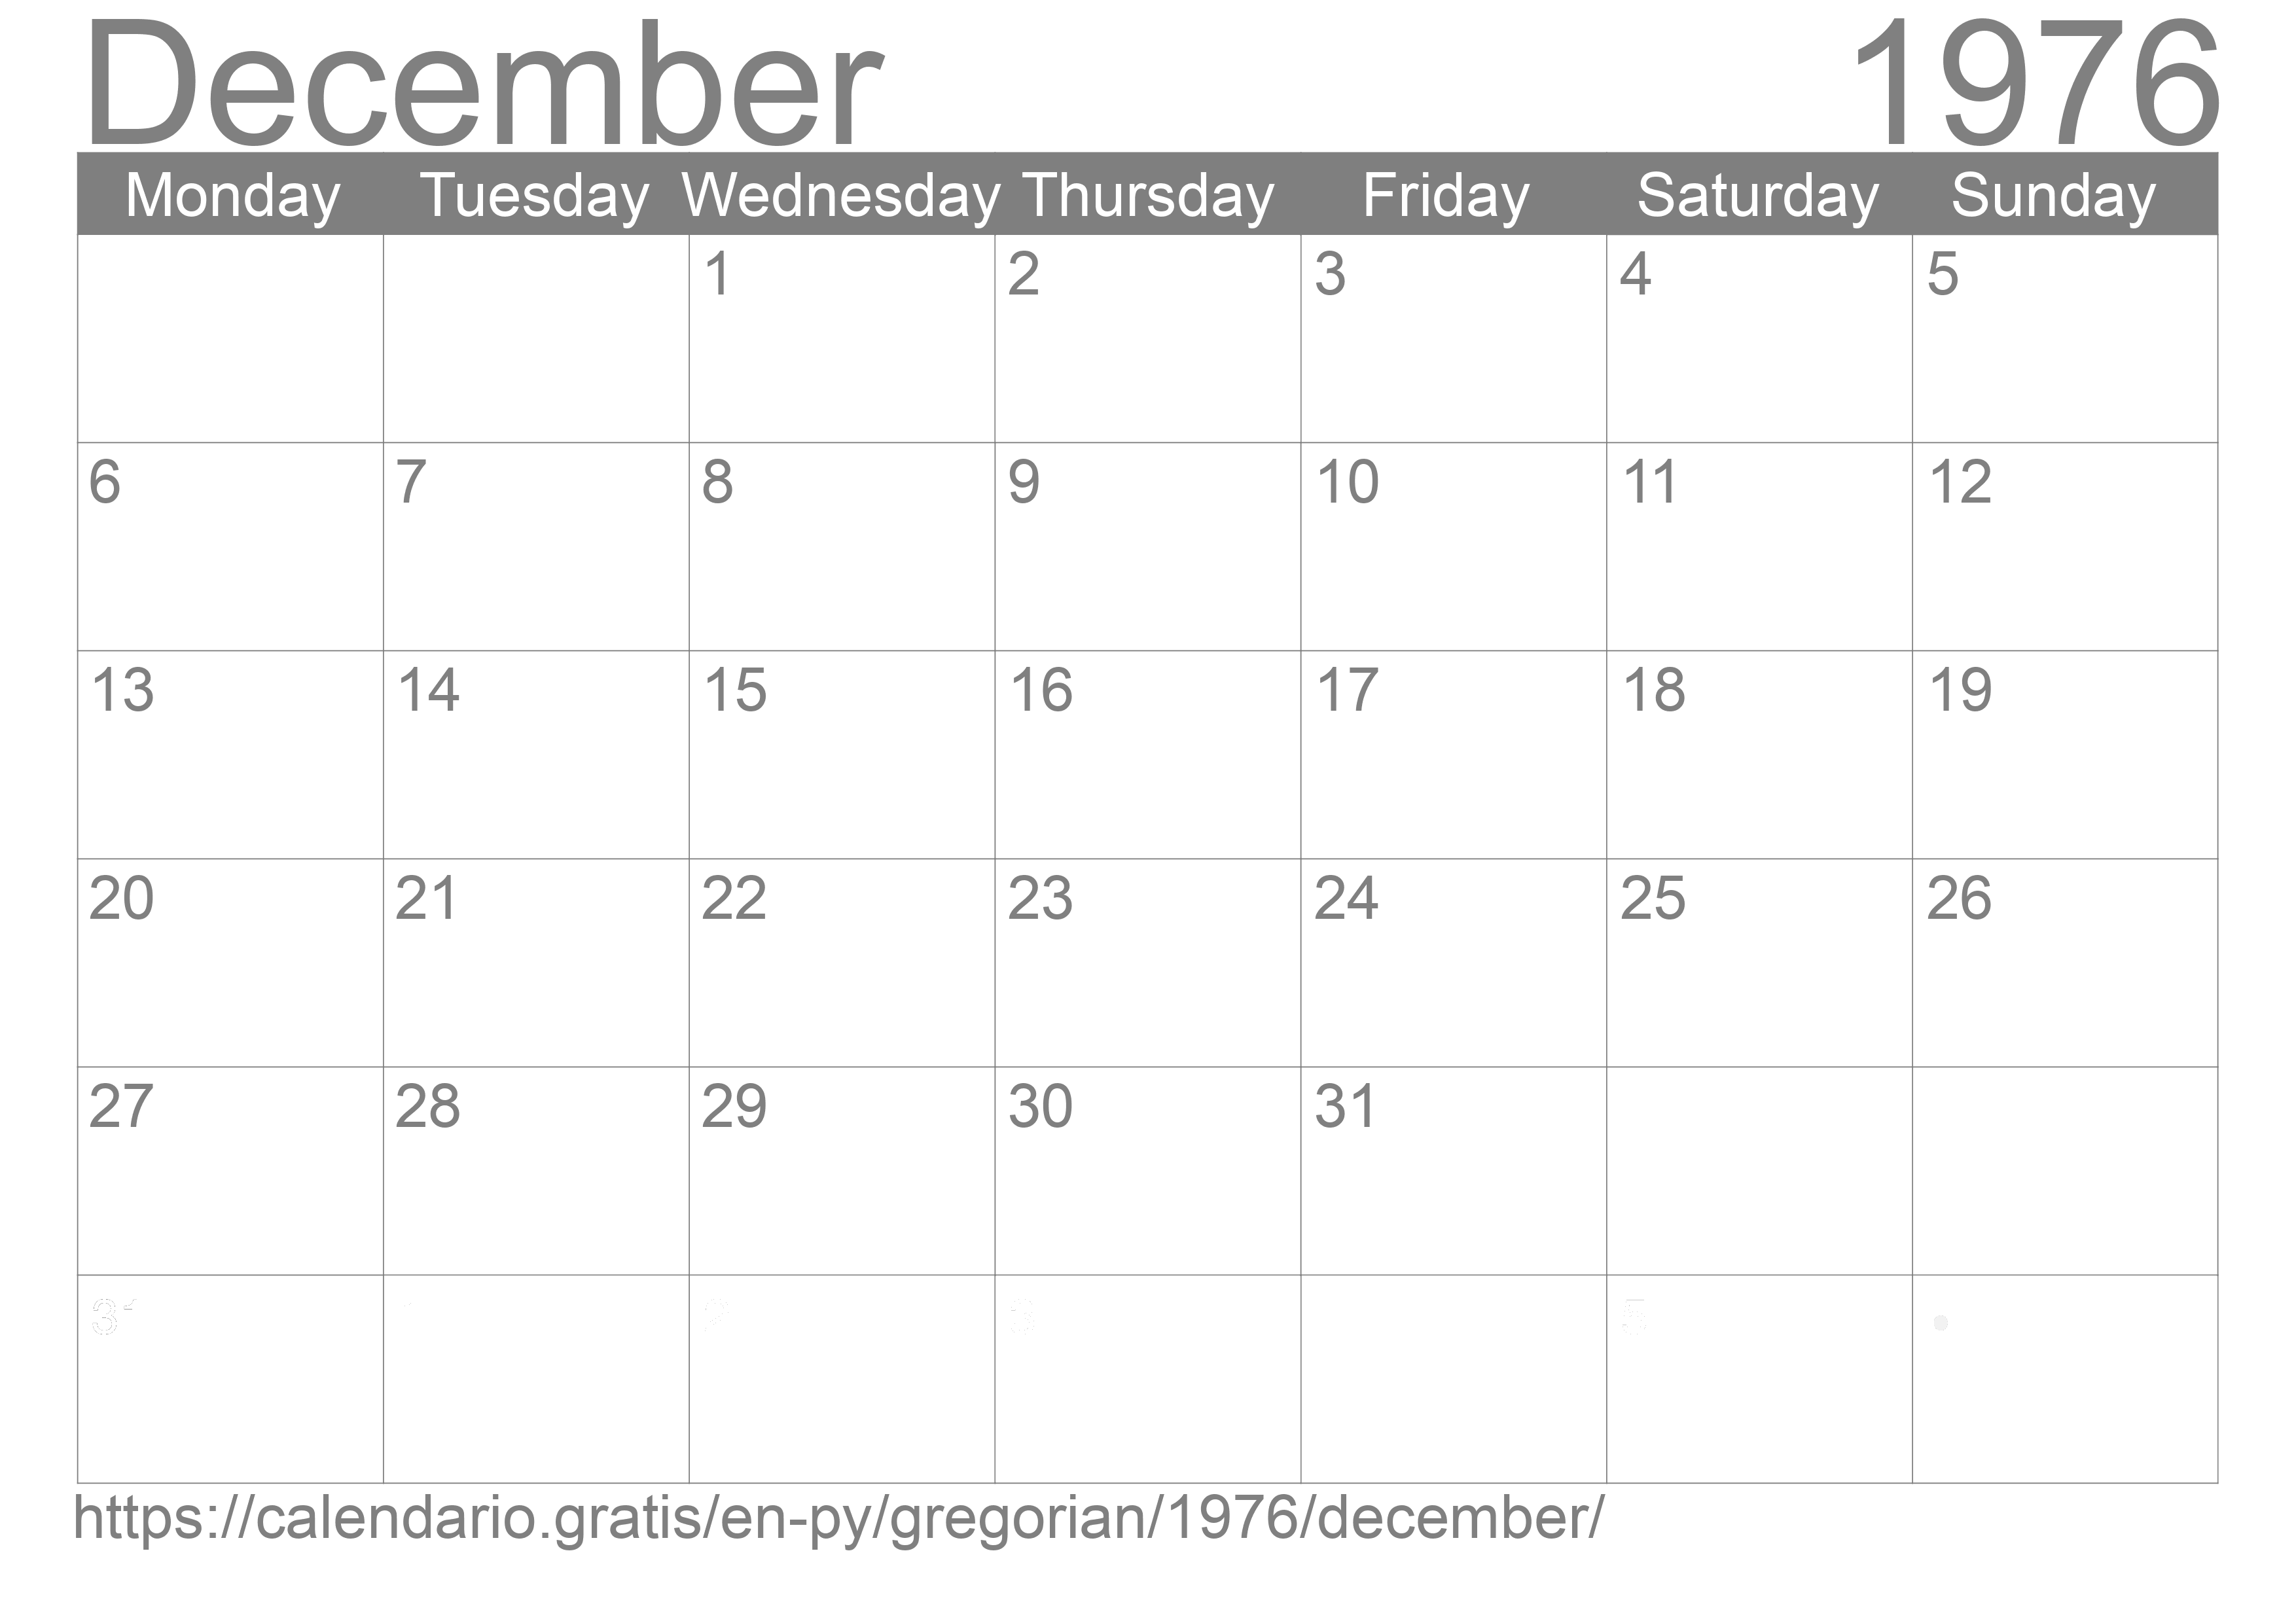 Calendar December 1976 to print